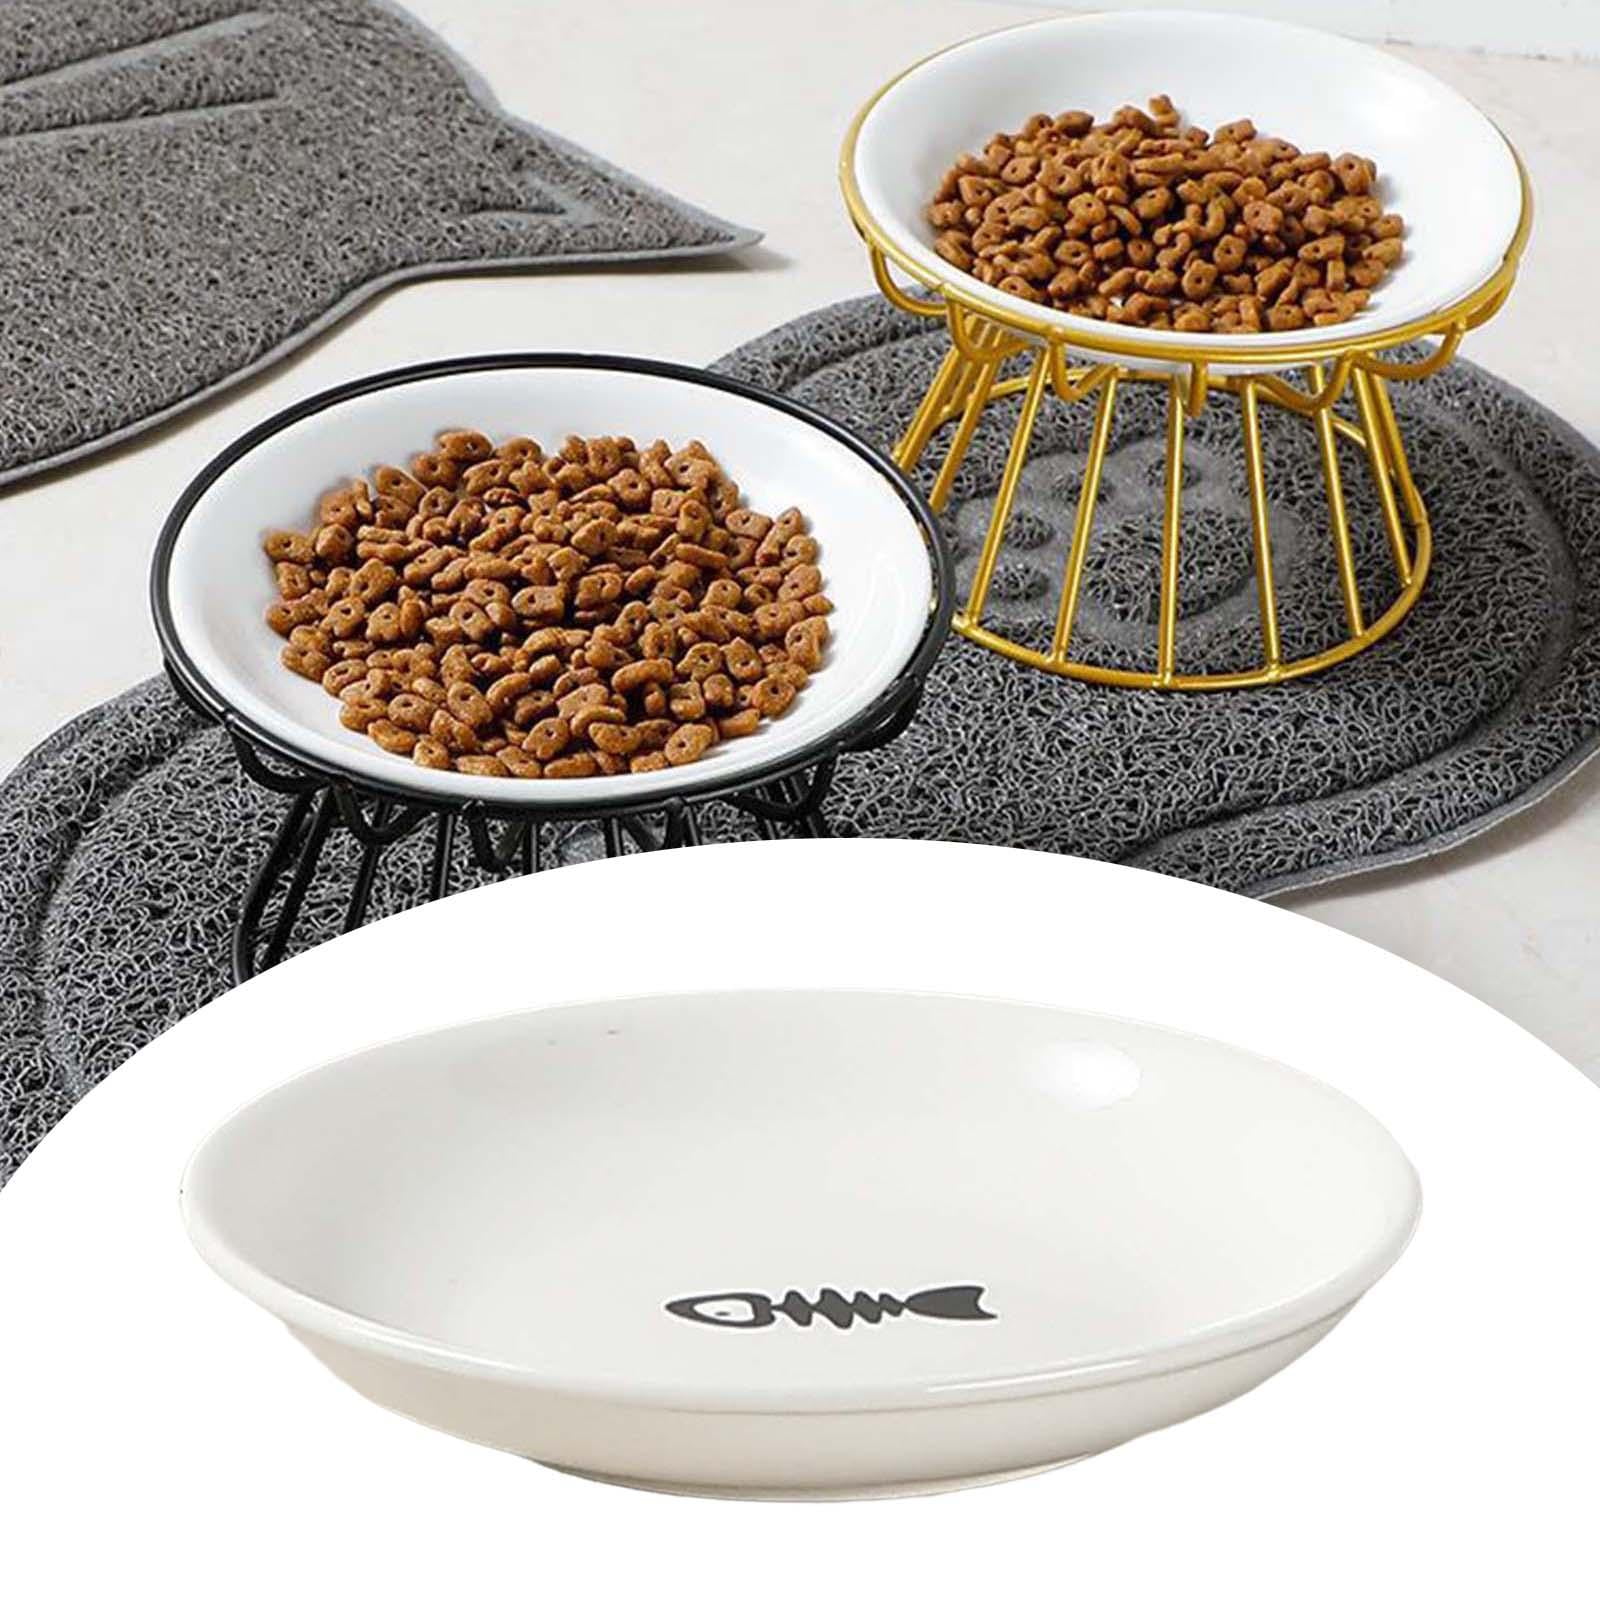 PETOMG Cat Bowls, Elevated Cat Bowl, Ceramic Cat Bowls, Raised Cat Food Bowls| Rubberwood